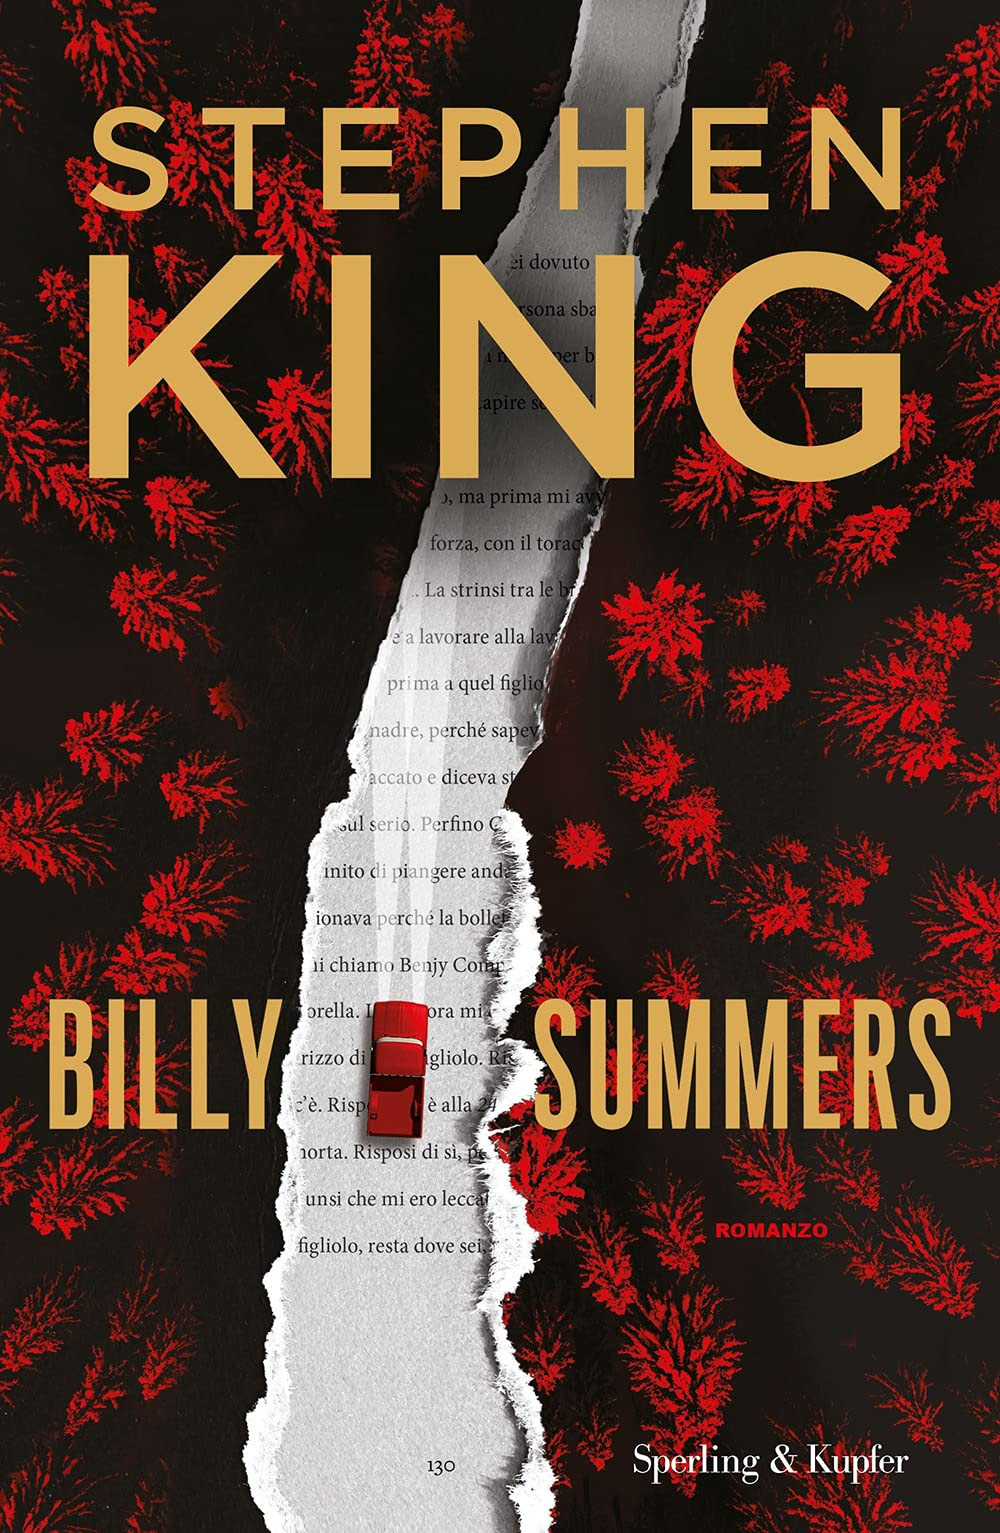 Billy Summers in Kindle/PDF/EPUB